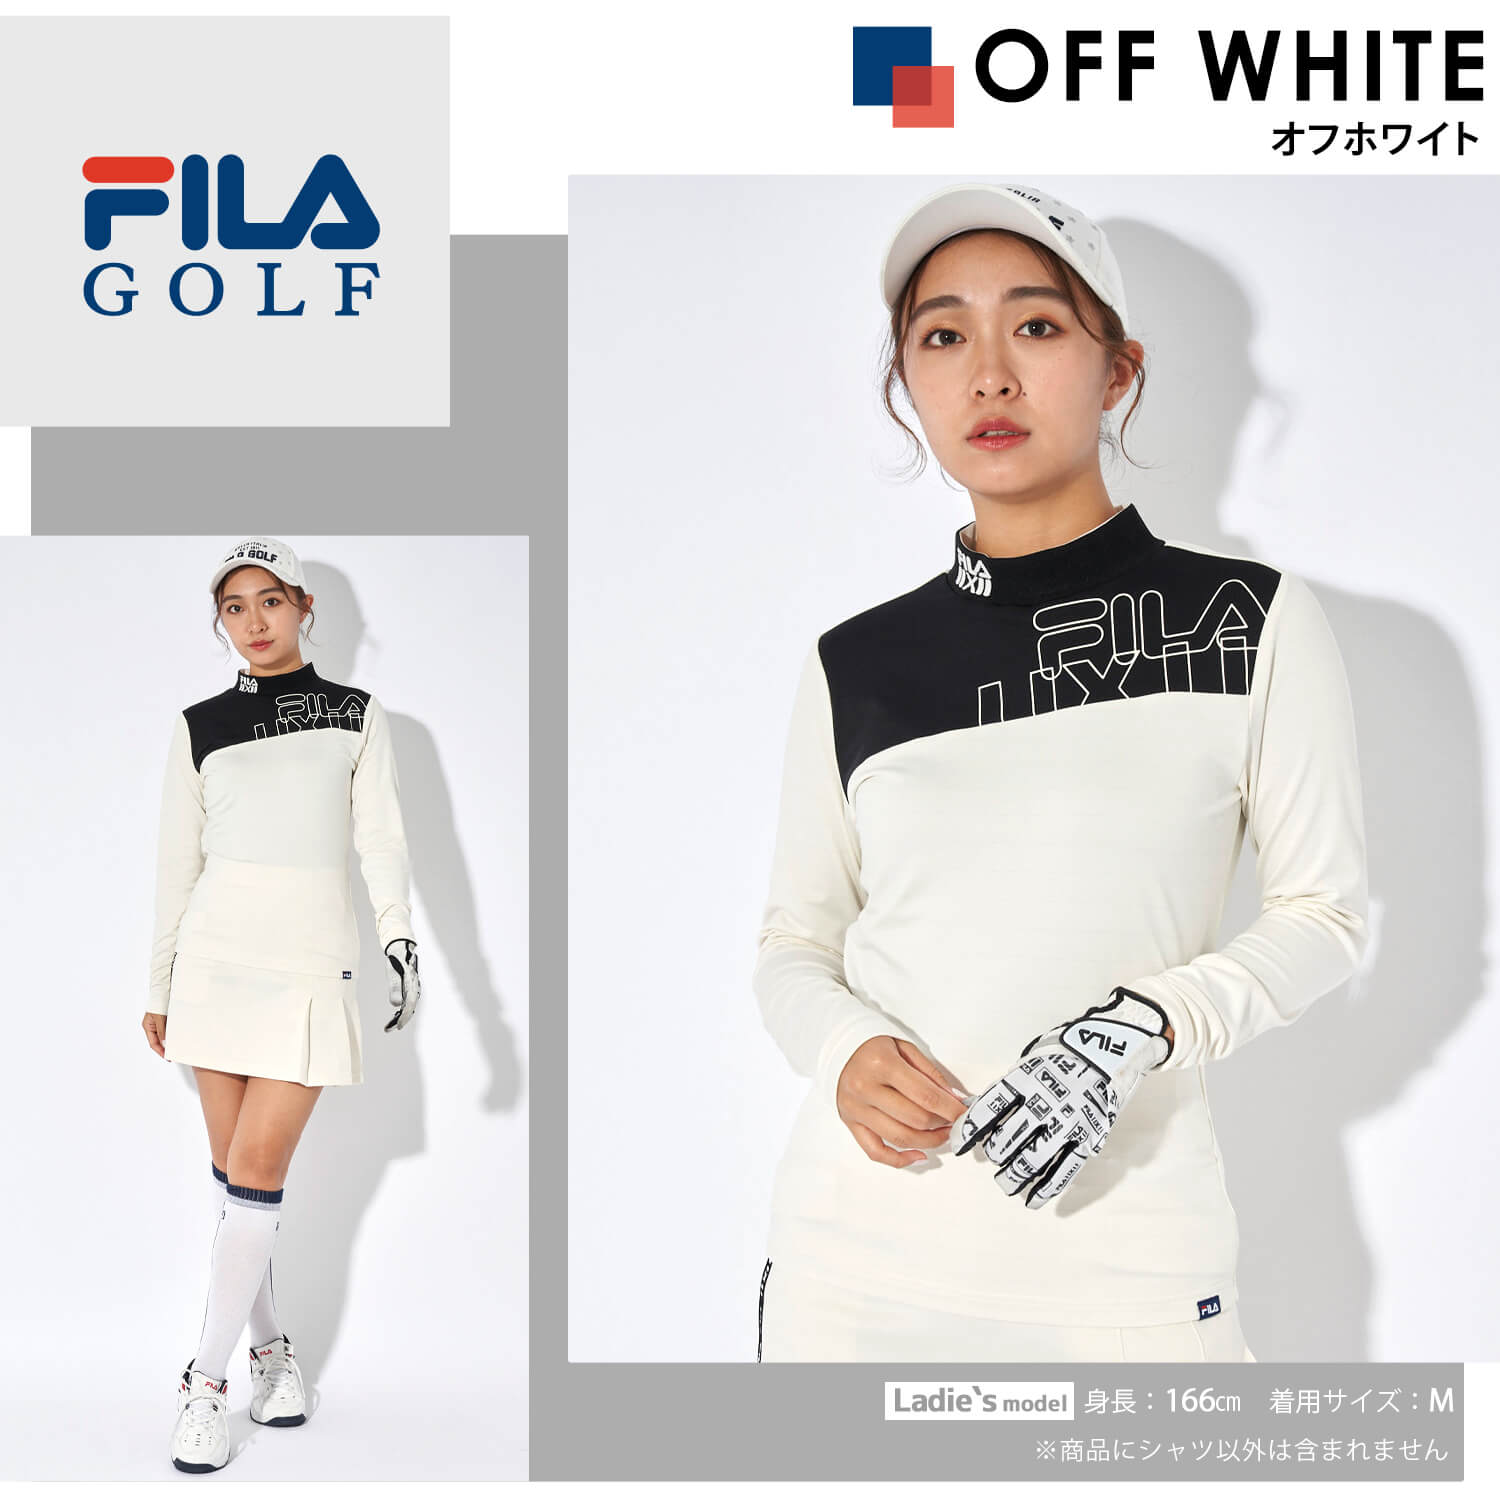 FILA GOLF/フィラゴルフ ゴルフウェア ブランド ロゴ 吸汗速乾